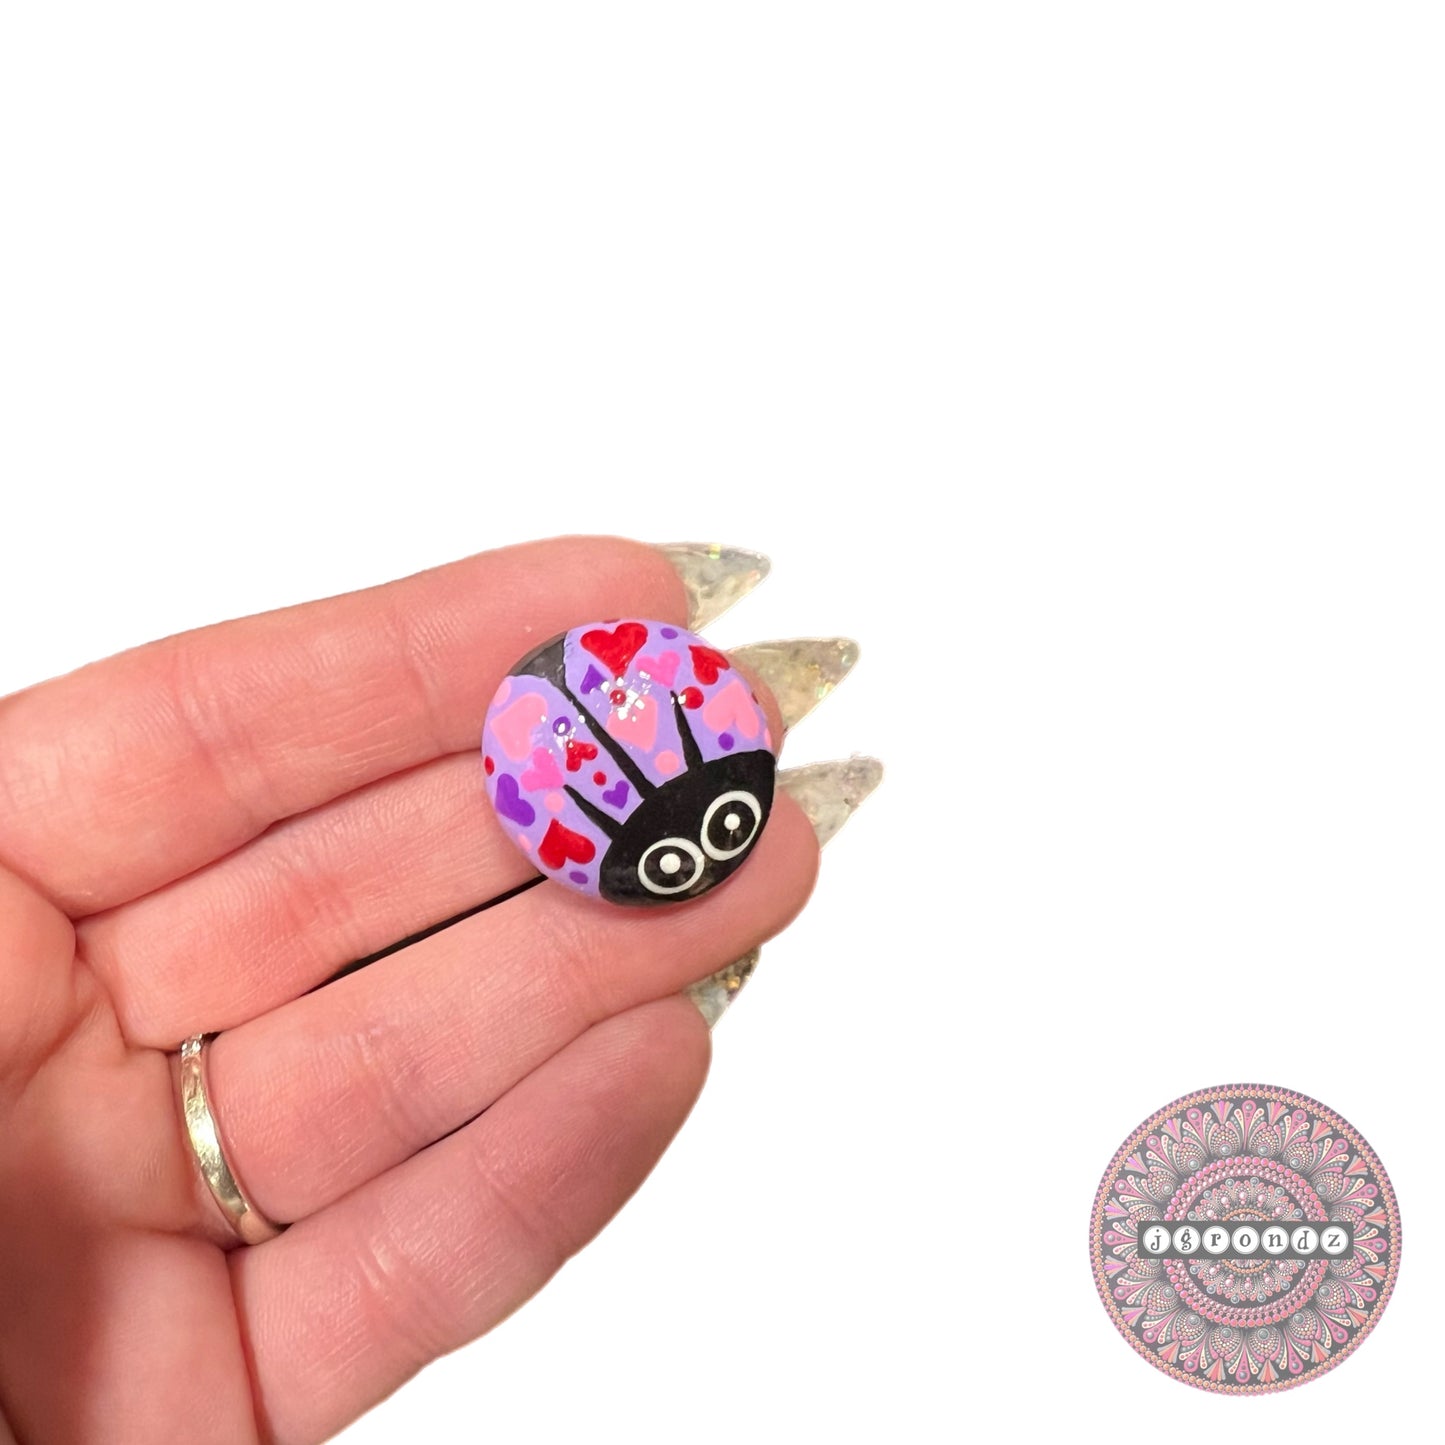 Pretty Pebbles Minis - Magnet Singles